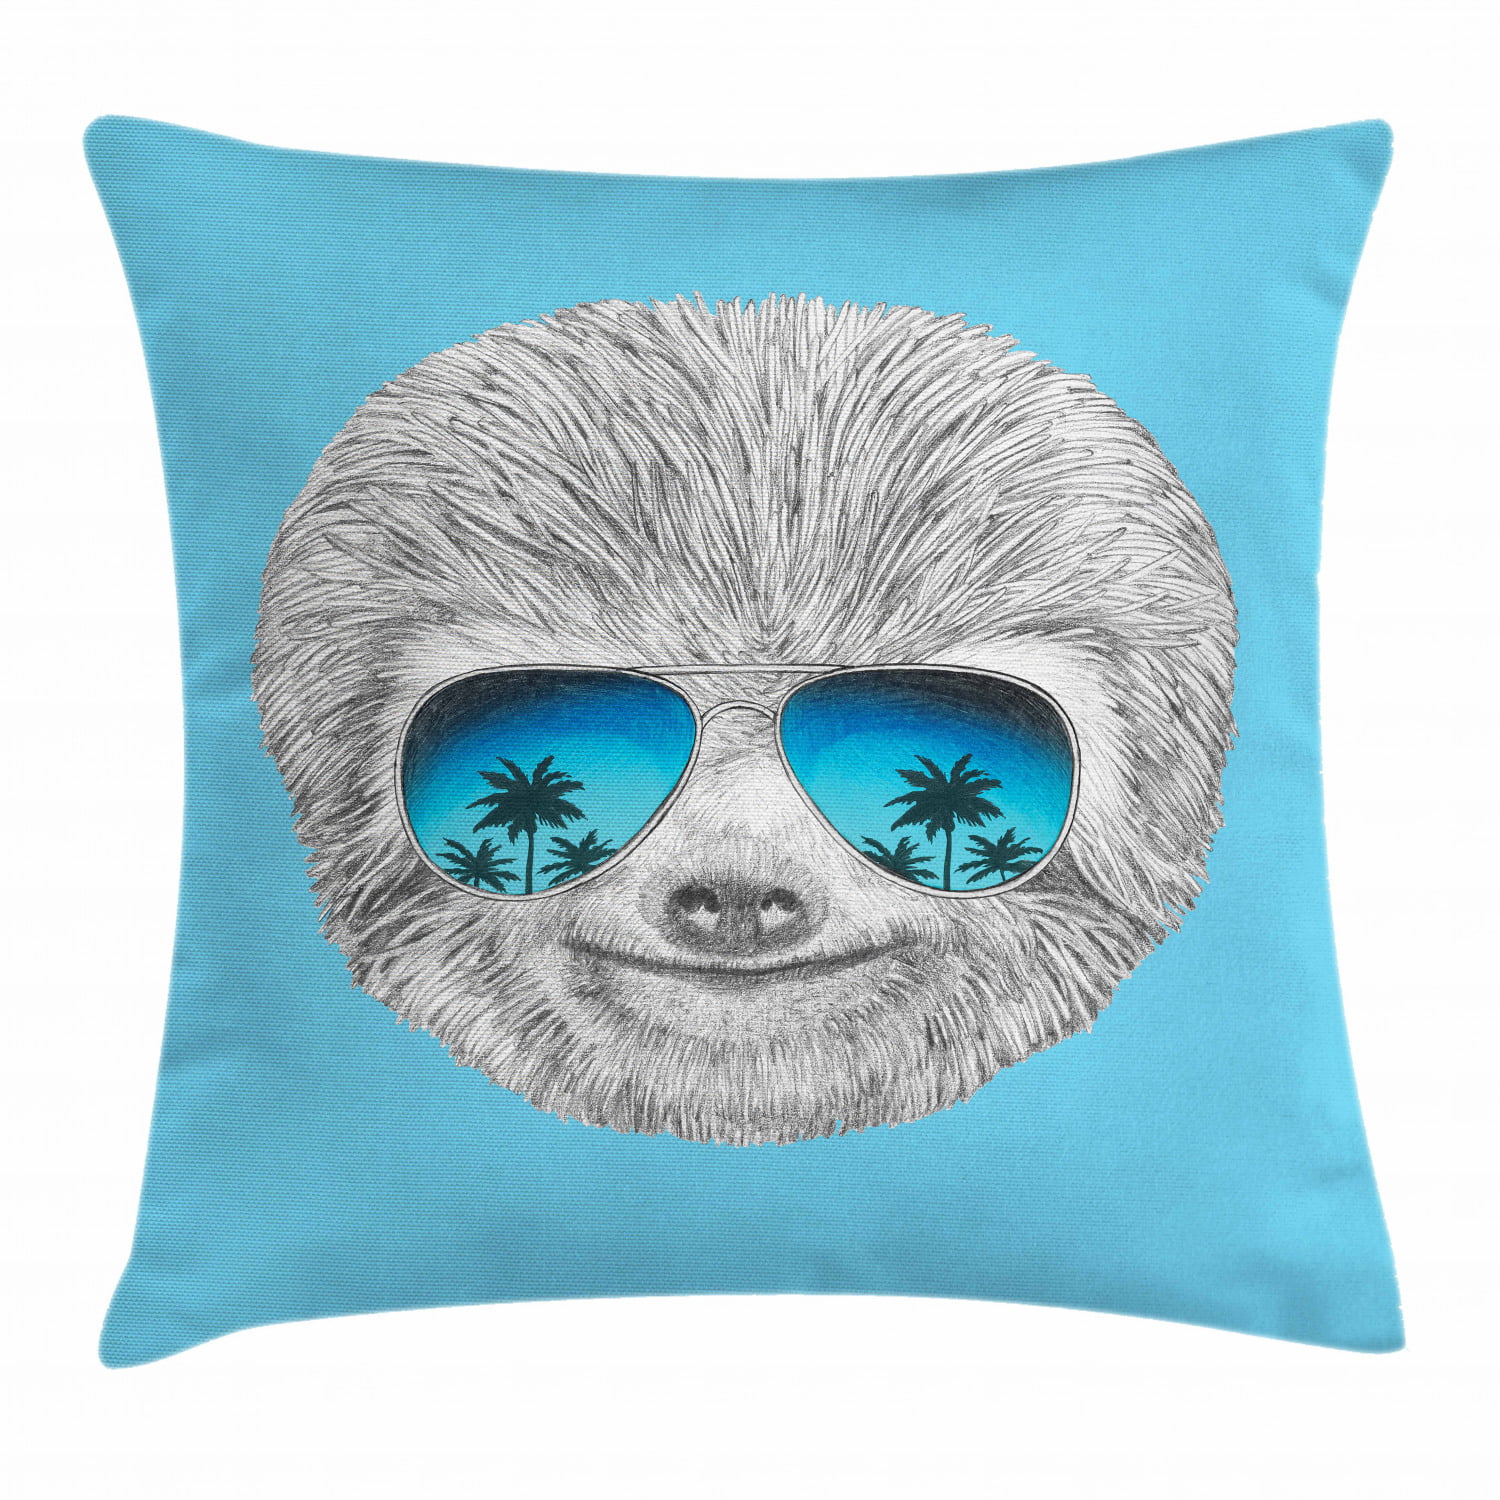 Sloth Latch Hook Kits DIY Throw Pillow Cover Crochet Crafts